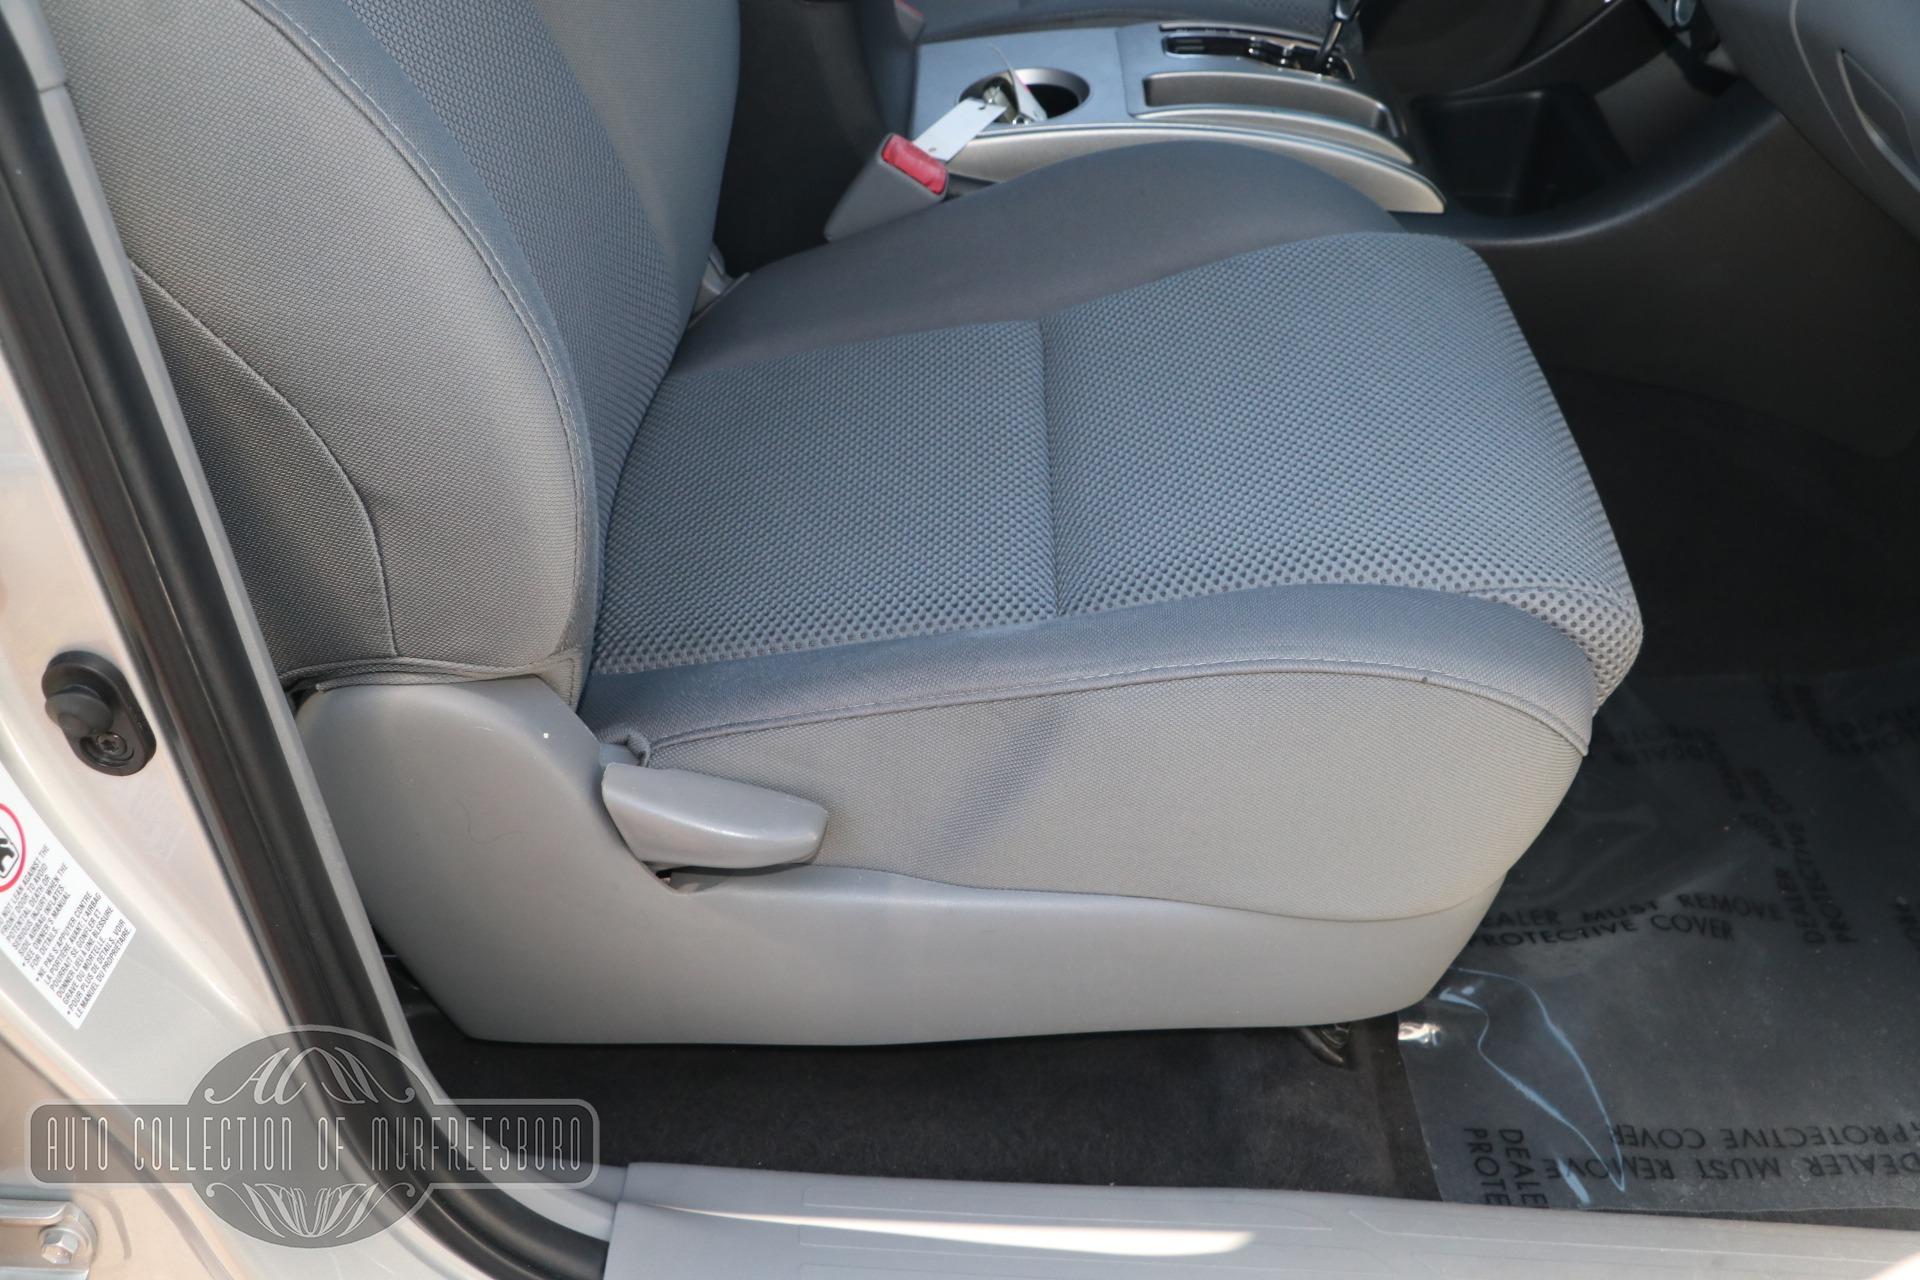 Toyota Tacoma Front Seat Riser – TheAvidOutdoors